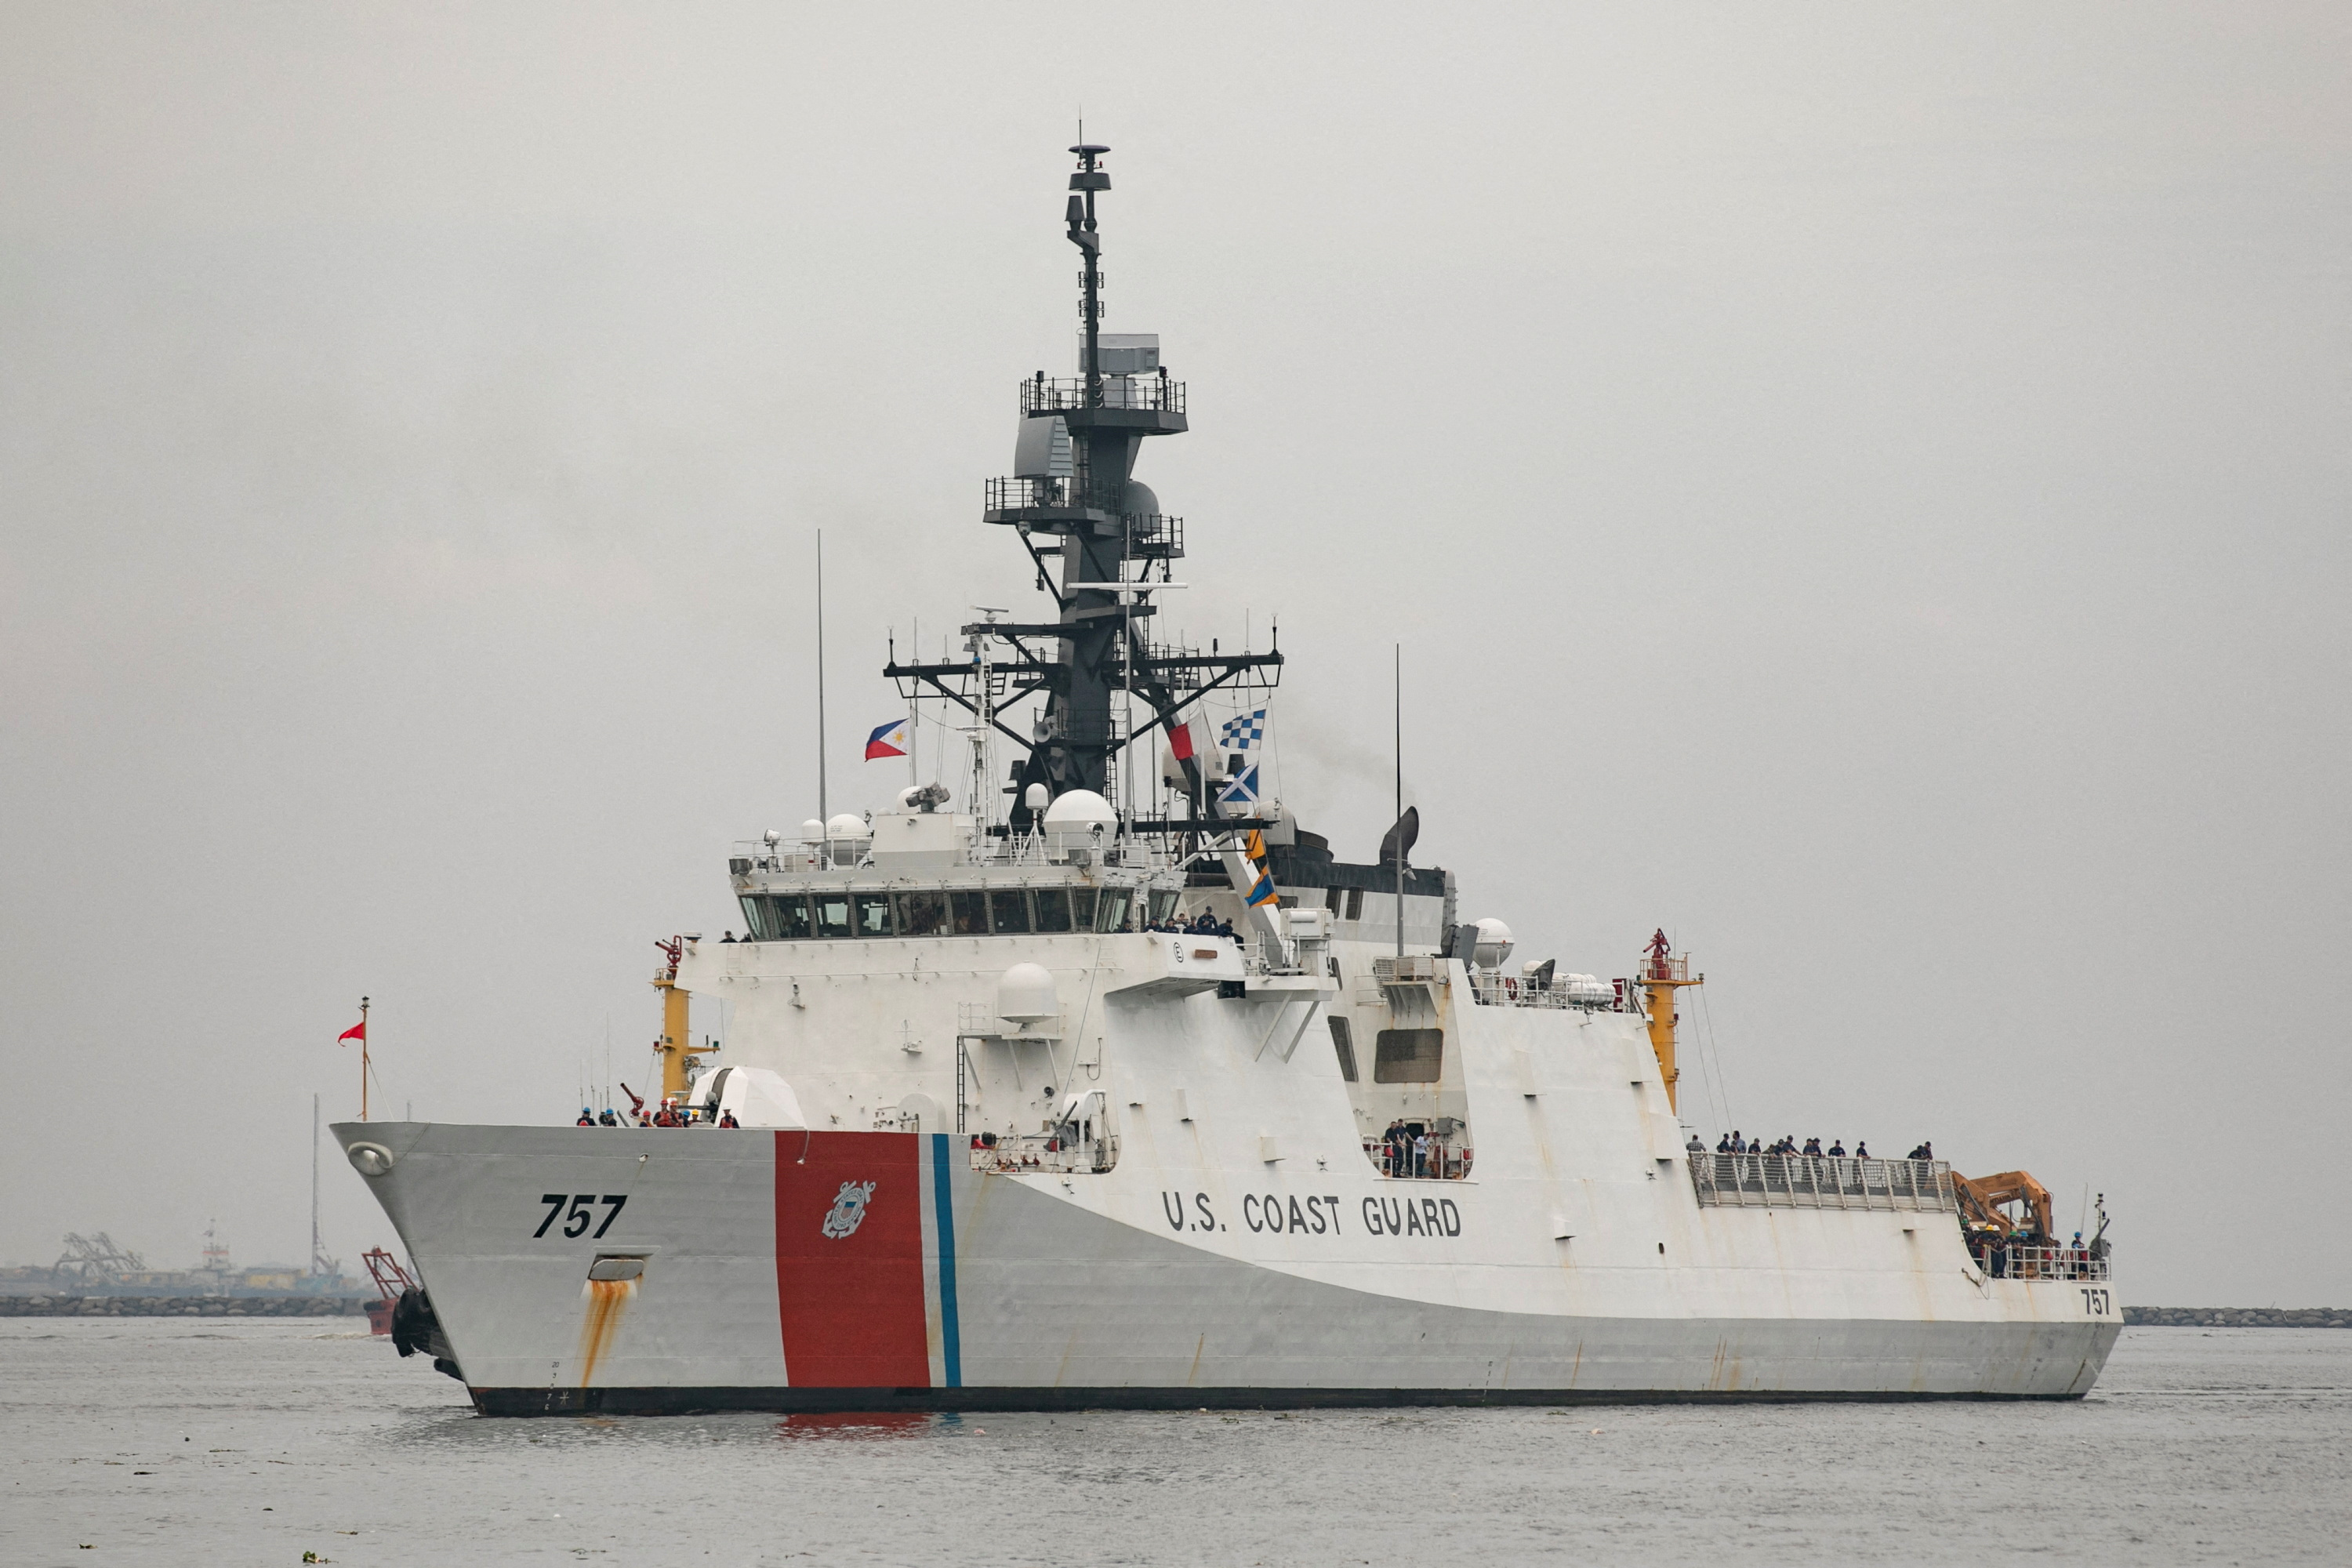 U.S. cutter arrives at Manila port for joint coast guard drills